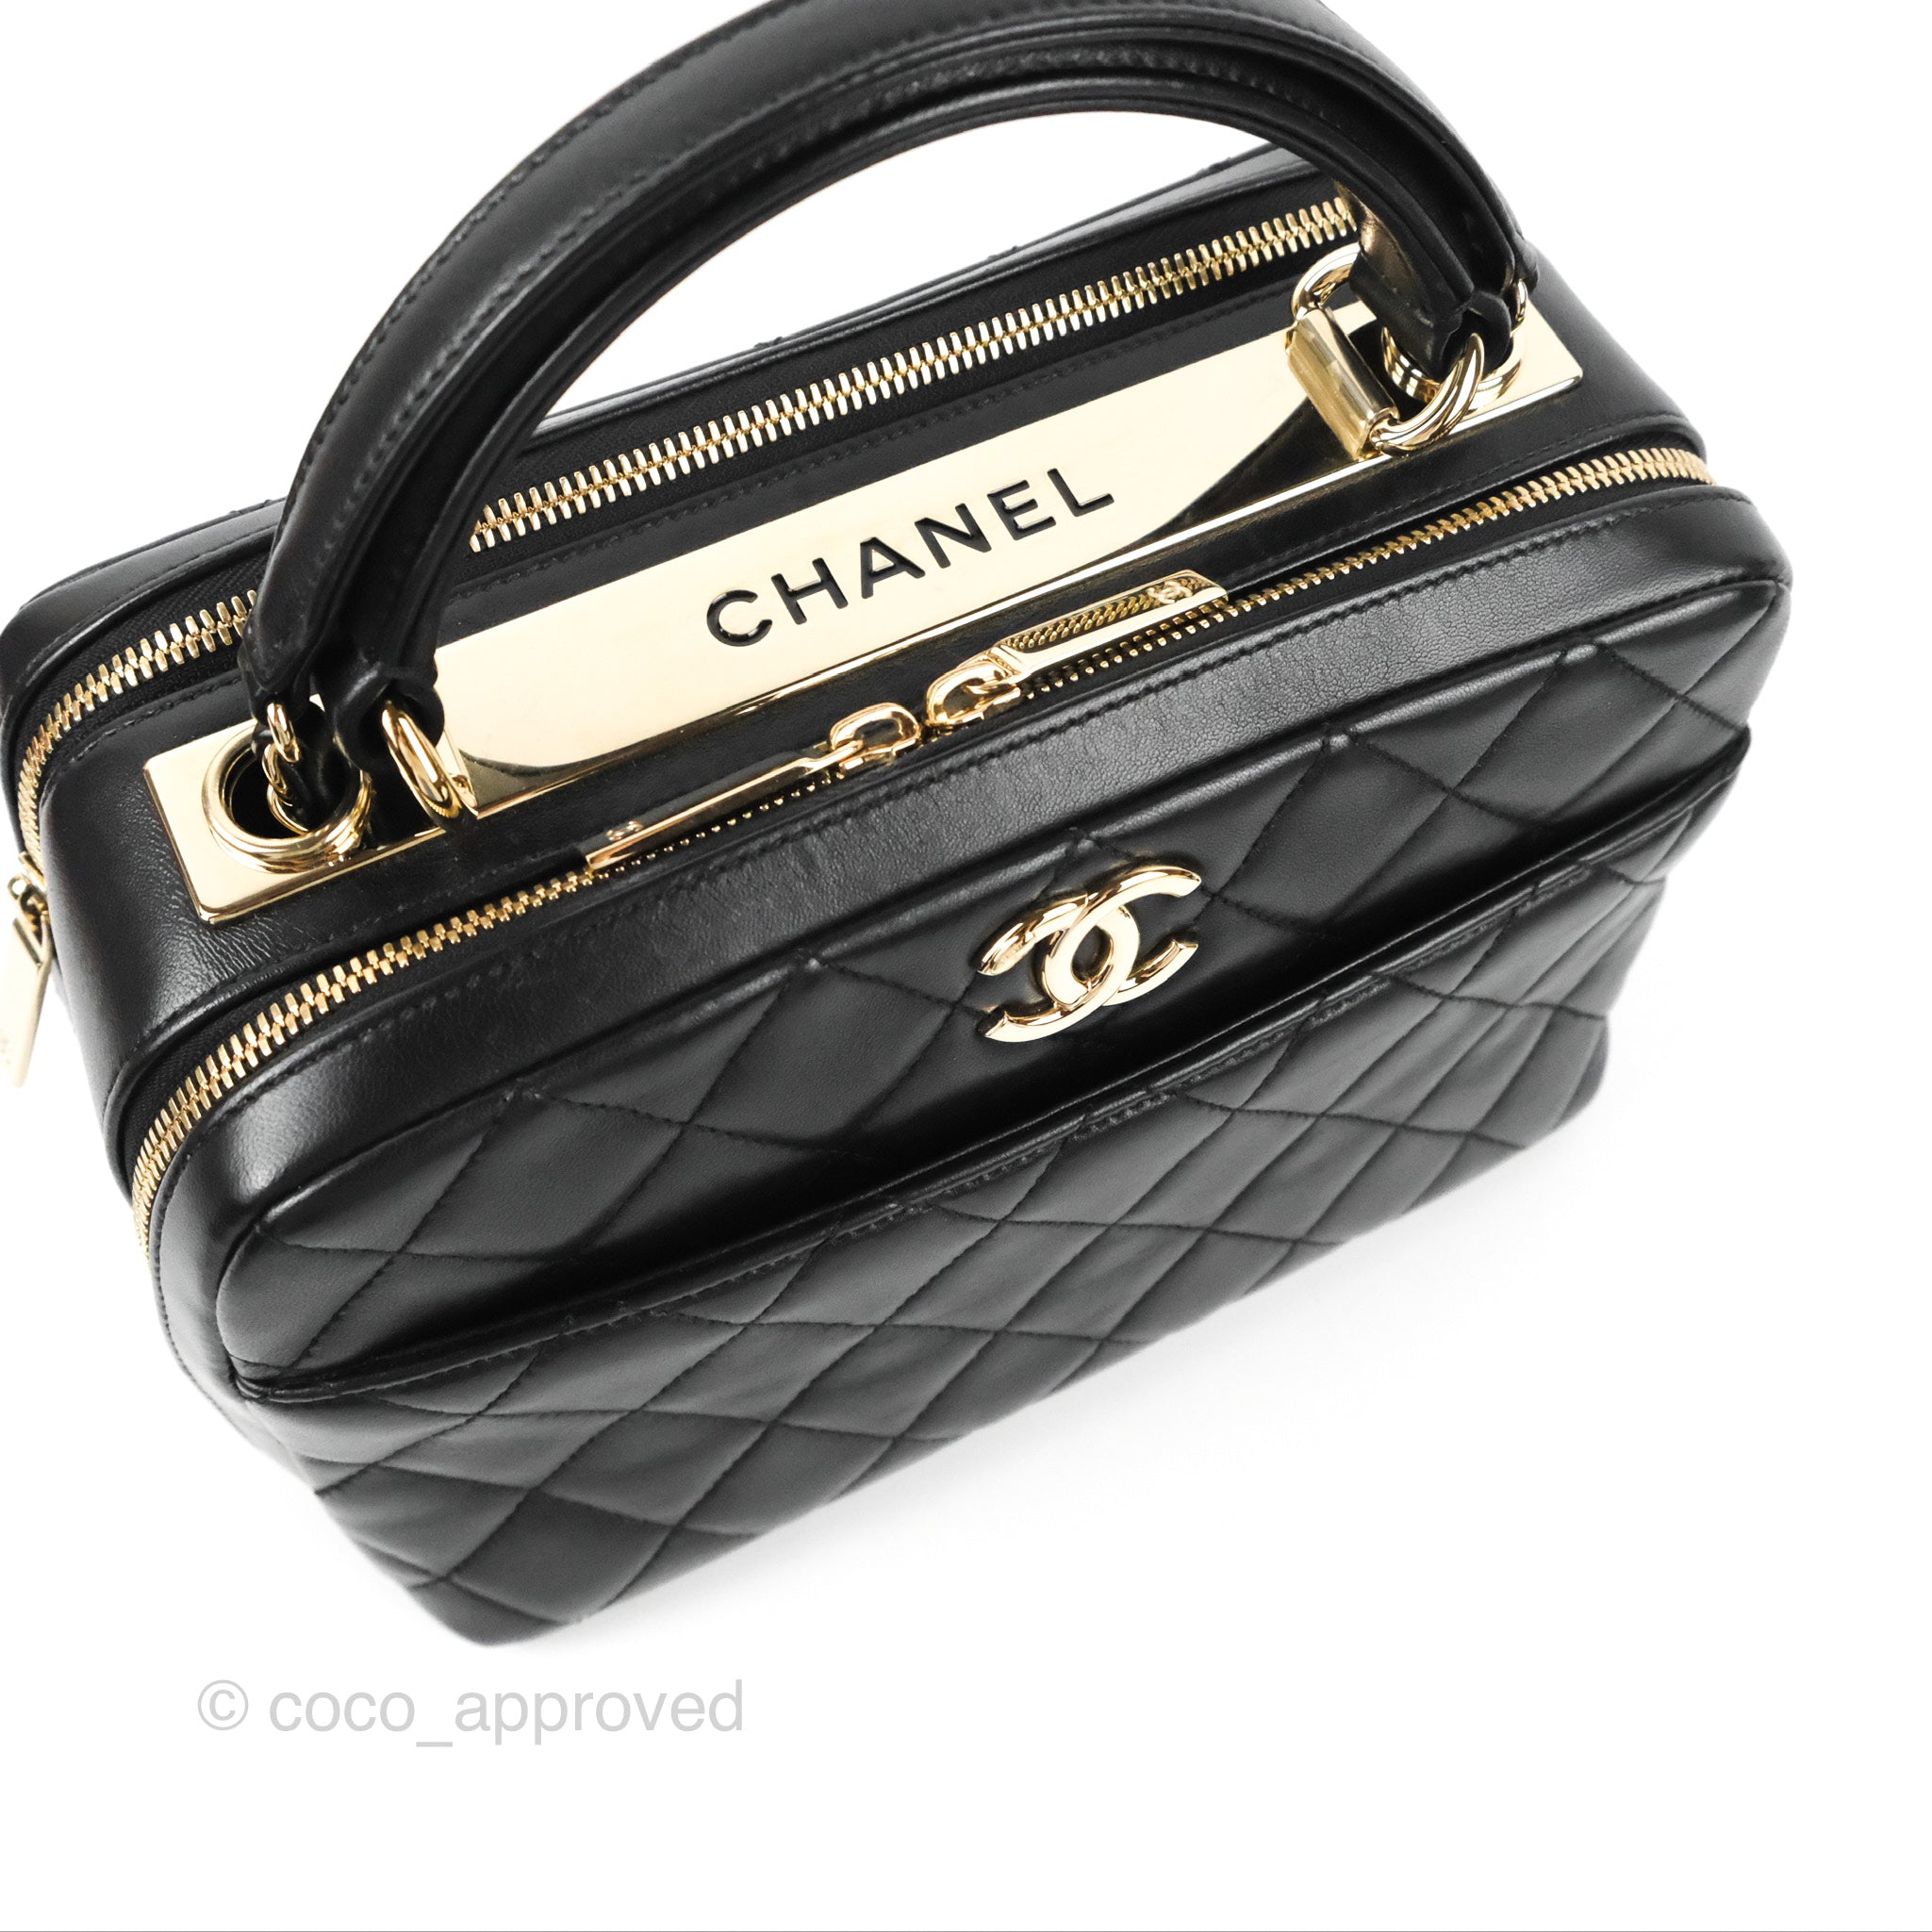 Chanel 2019 Medium Chevron Trendy CC bowling bag in Navy Blue with